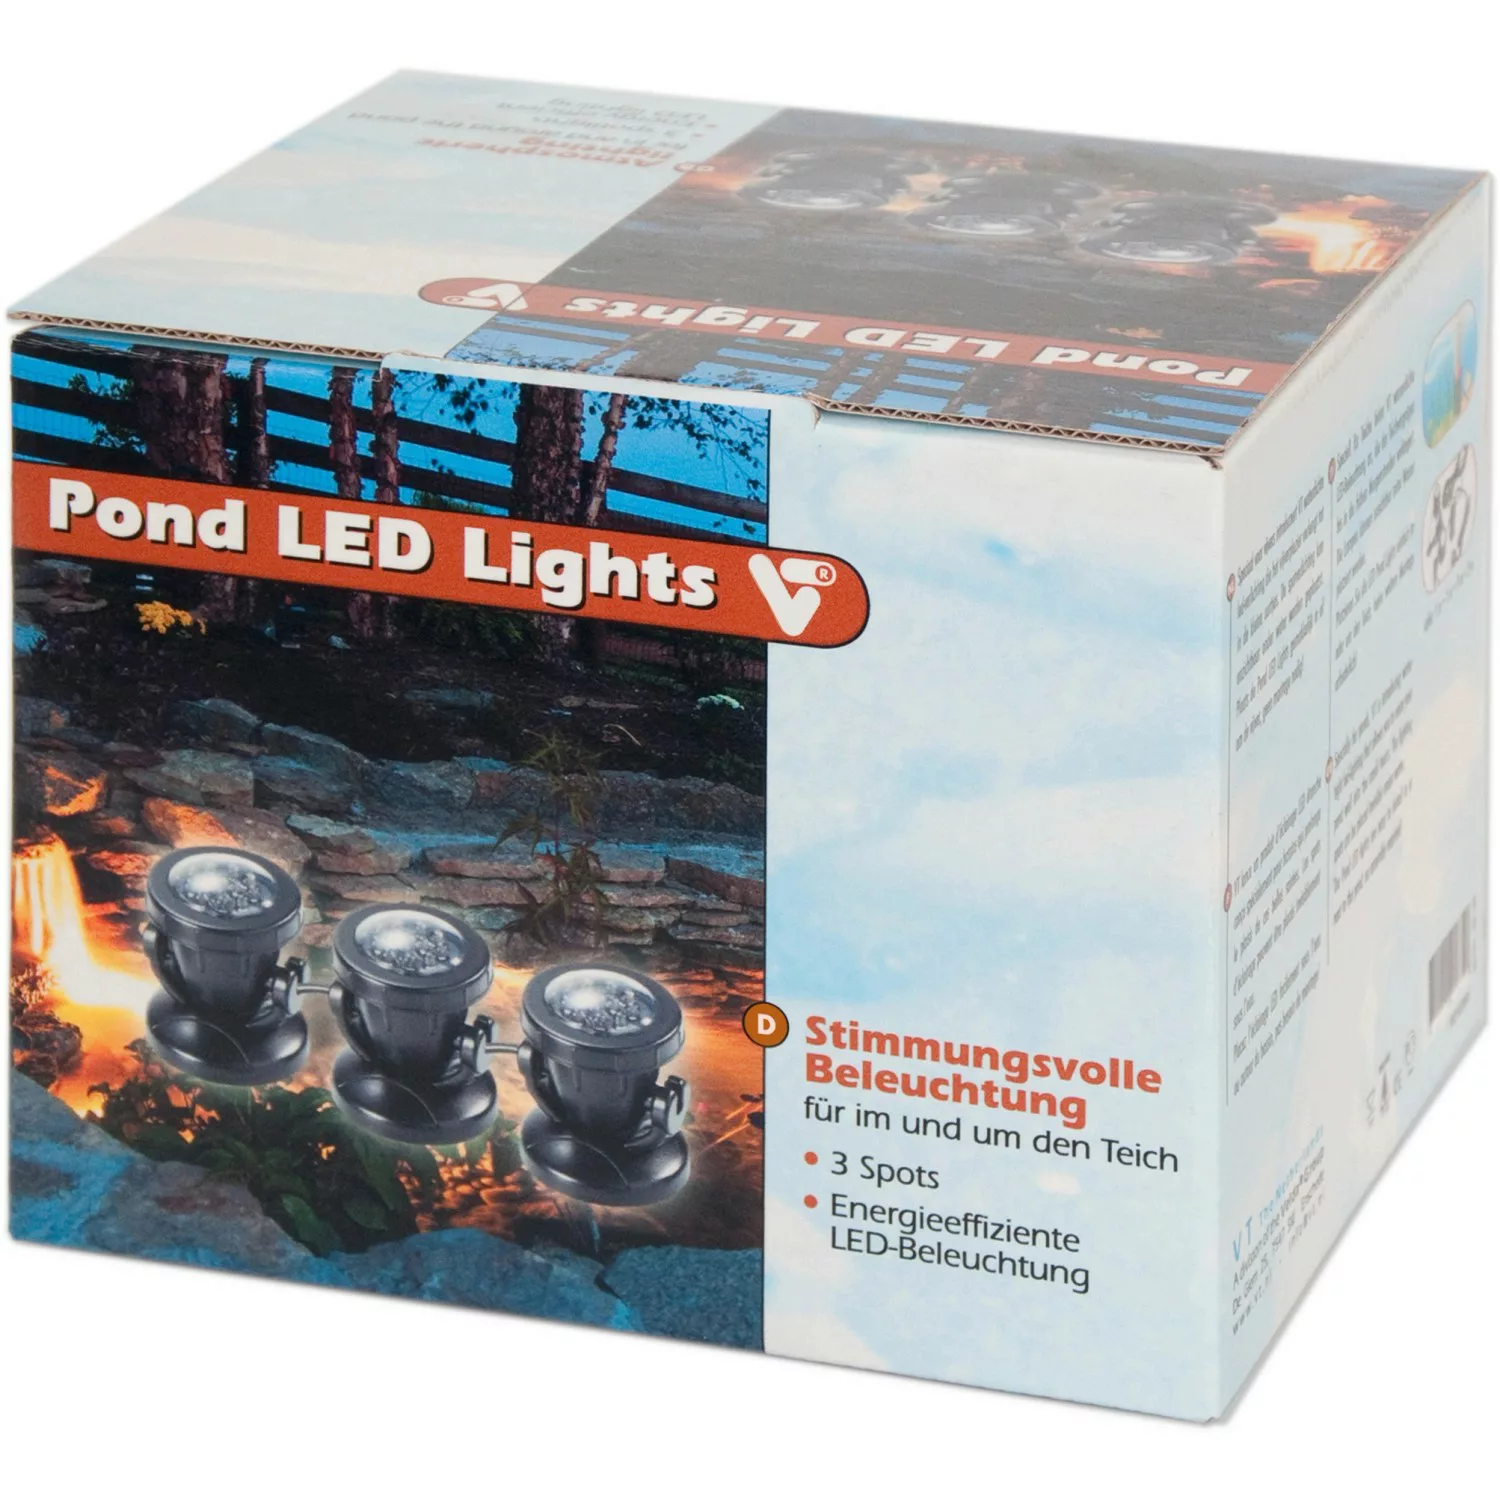 VT LED Teichbeleuchtung mit 3 Spots Pond LED Lights günstig online kaufen